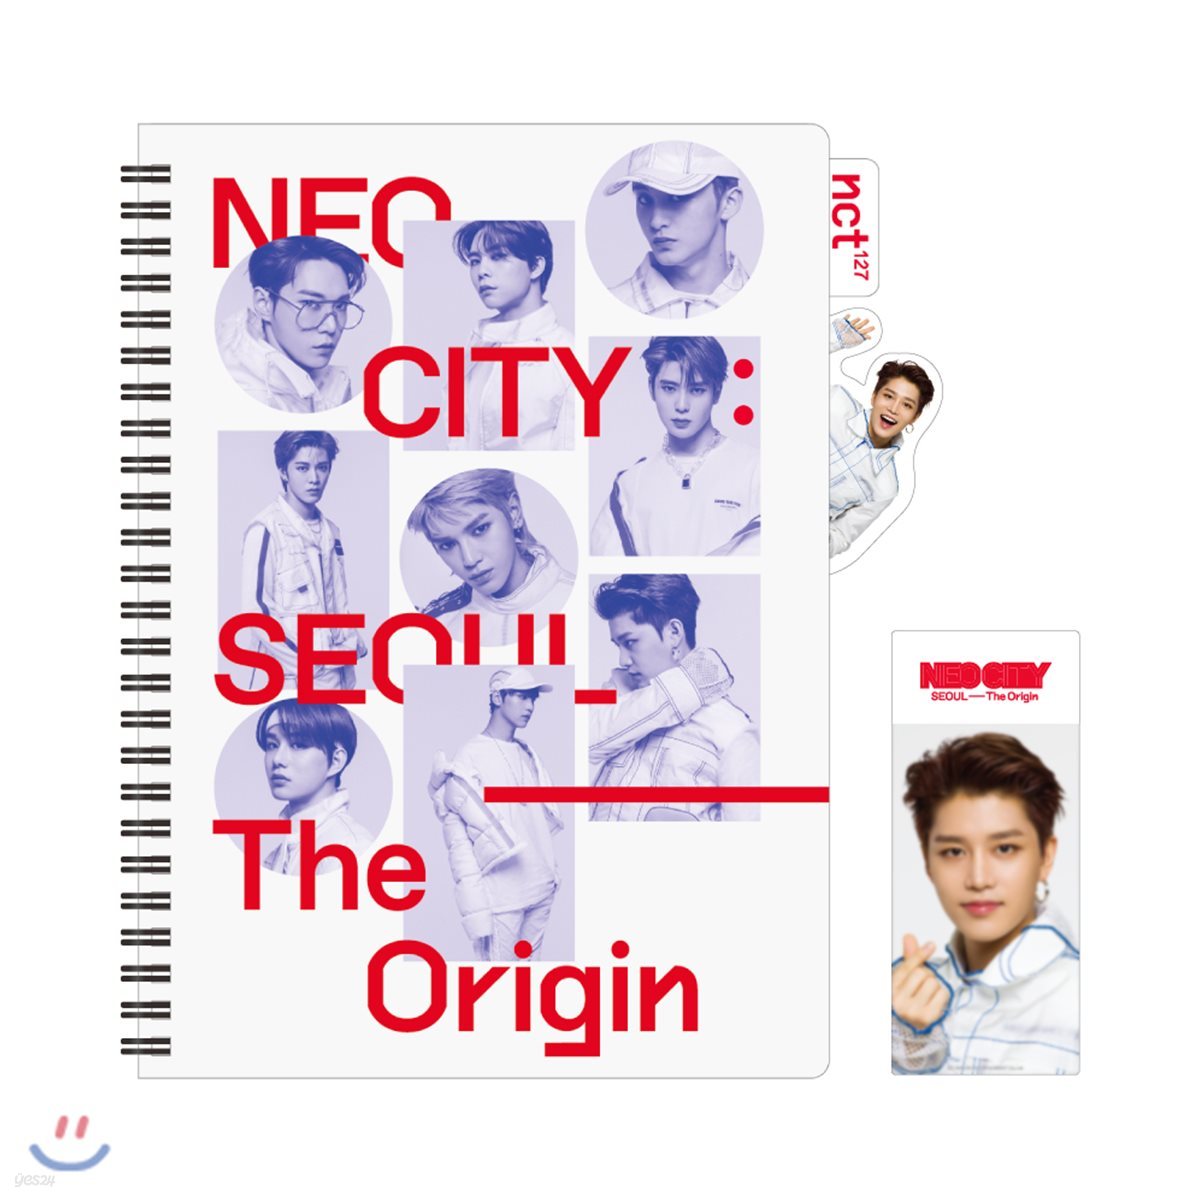 NCT 127 [NEO CITY : SEOUL - The Origin]- 인덱스노트+북마크 [태일]